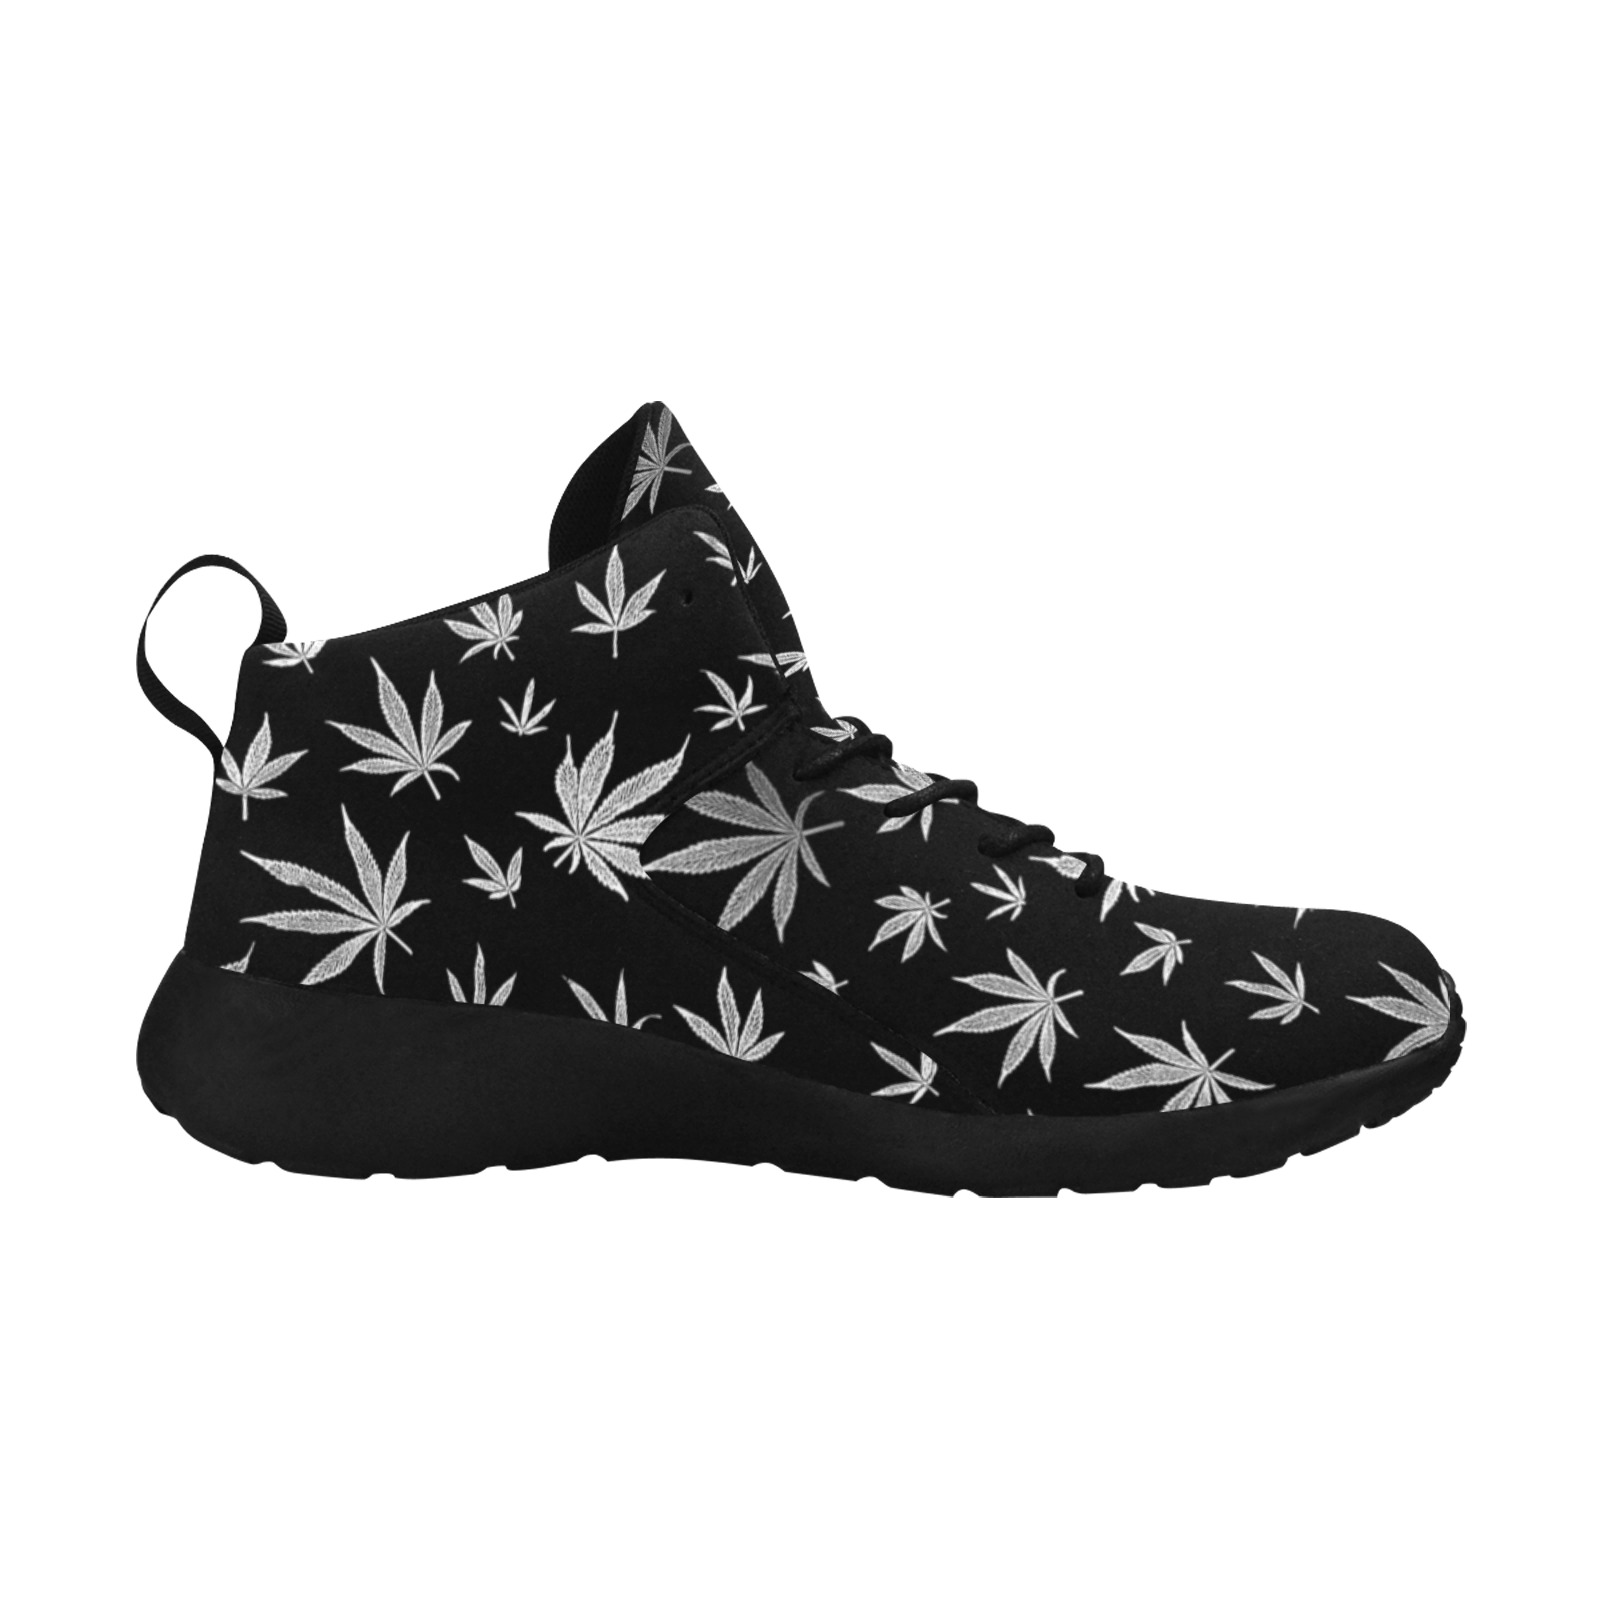 Black and White Marijuana Women's Chukka Training Shoes (Model 57502)